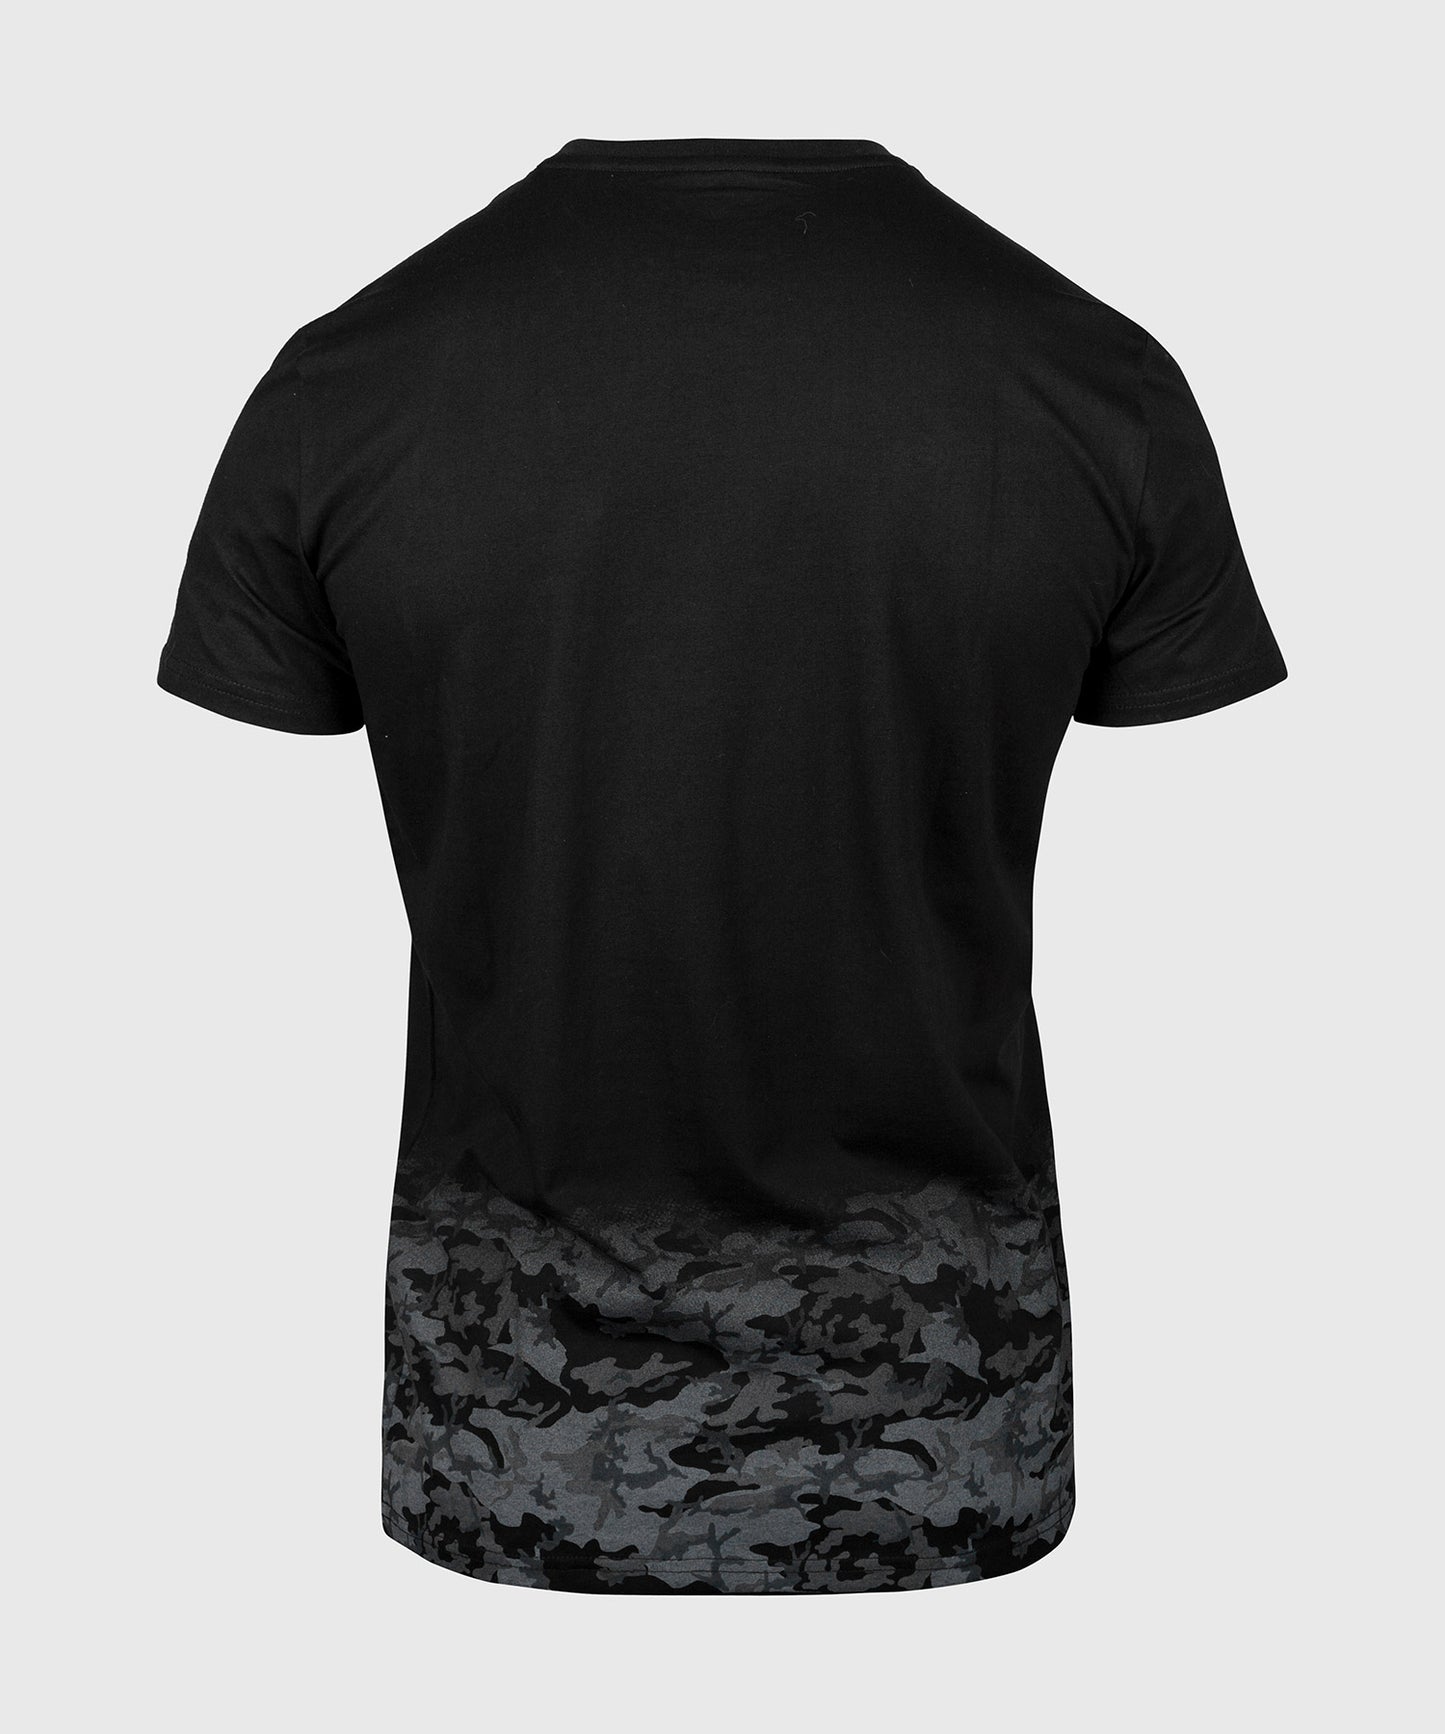 Venum Classic T-shirt - Zwart/Urban Camouflage